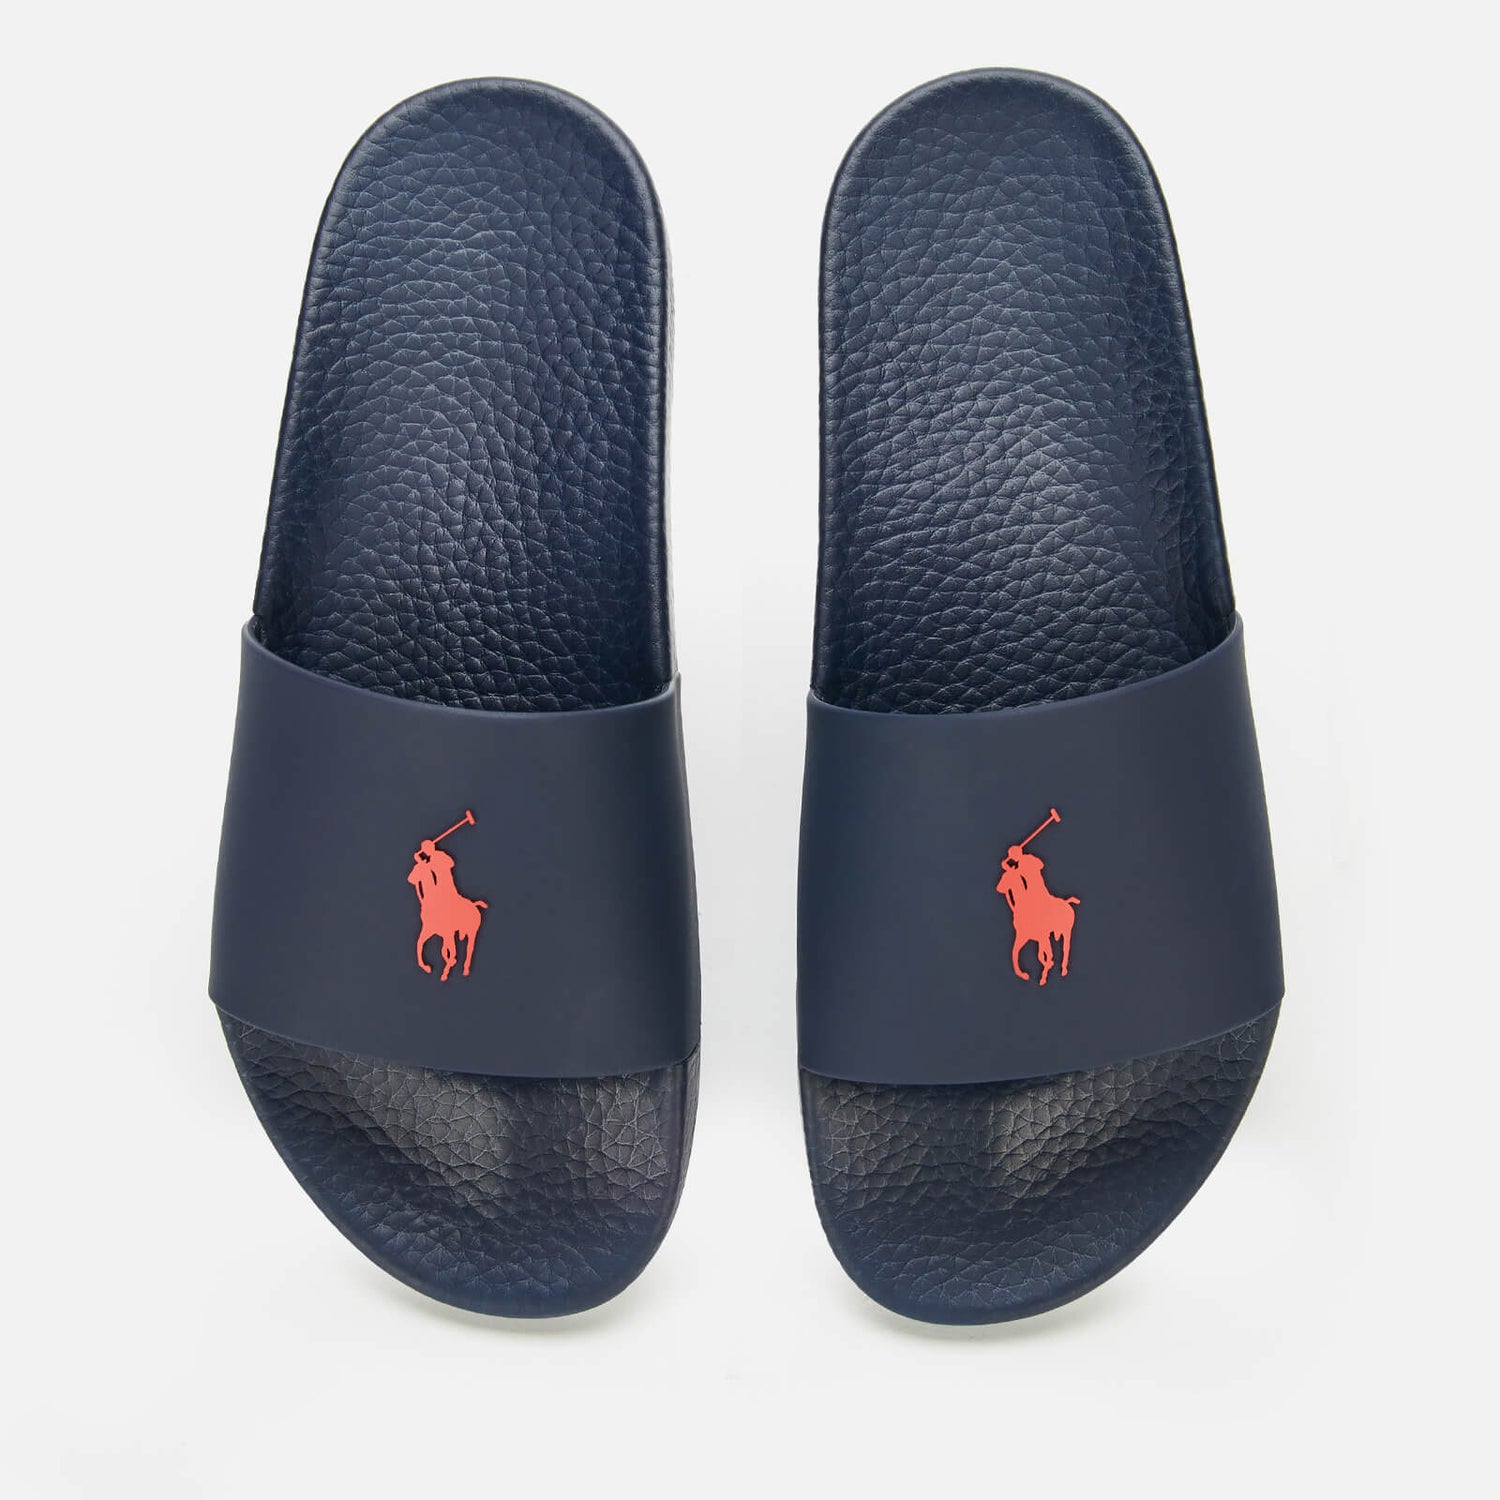 Polo Ralph Lauren Men's Slide Sandals - Navy/Red PP | TheHut.com